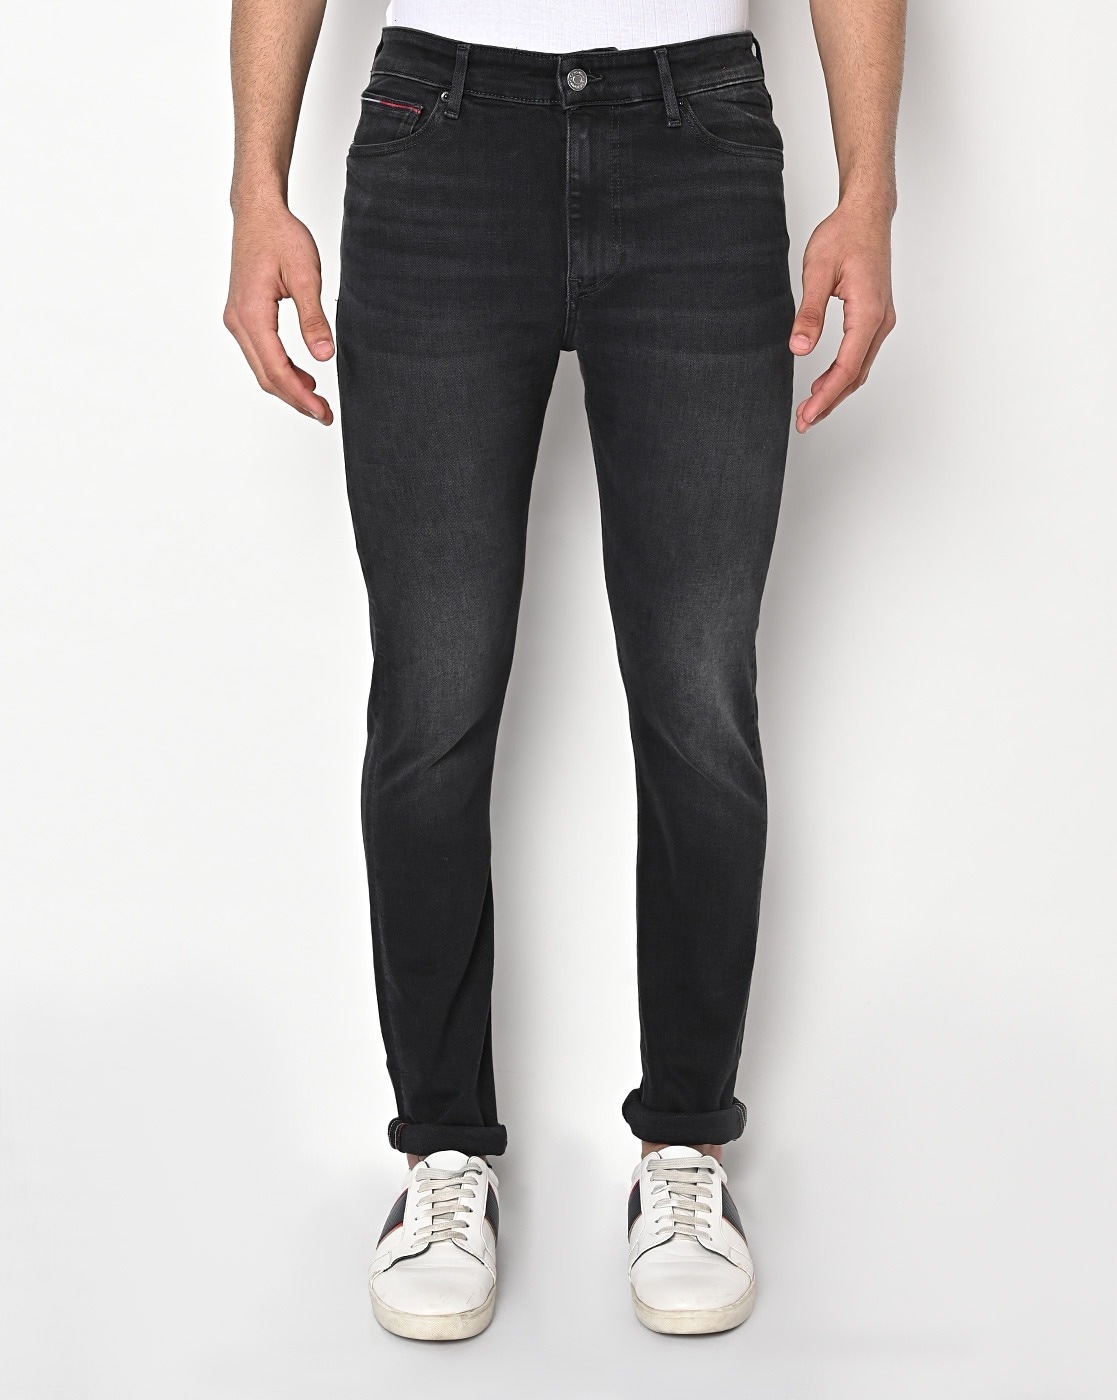 Buy Black Jeans Men by TOMMY HILFIGER | Ajio.com